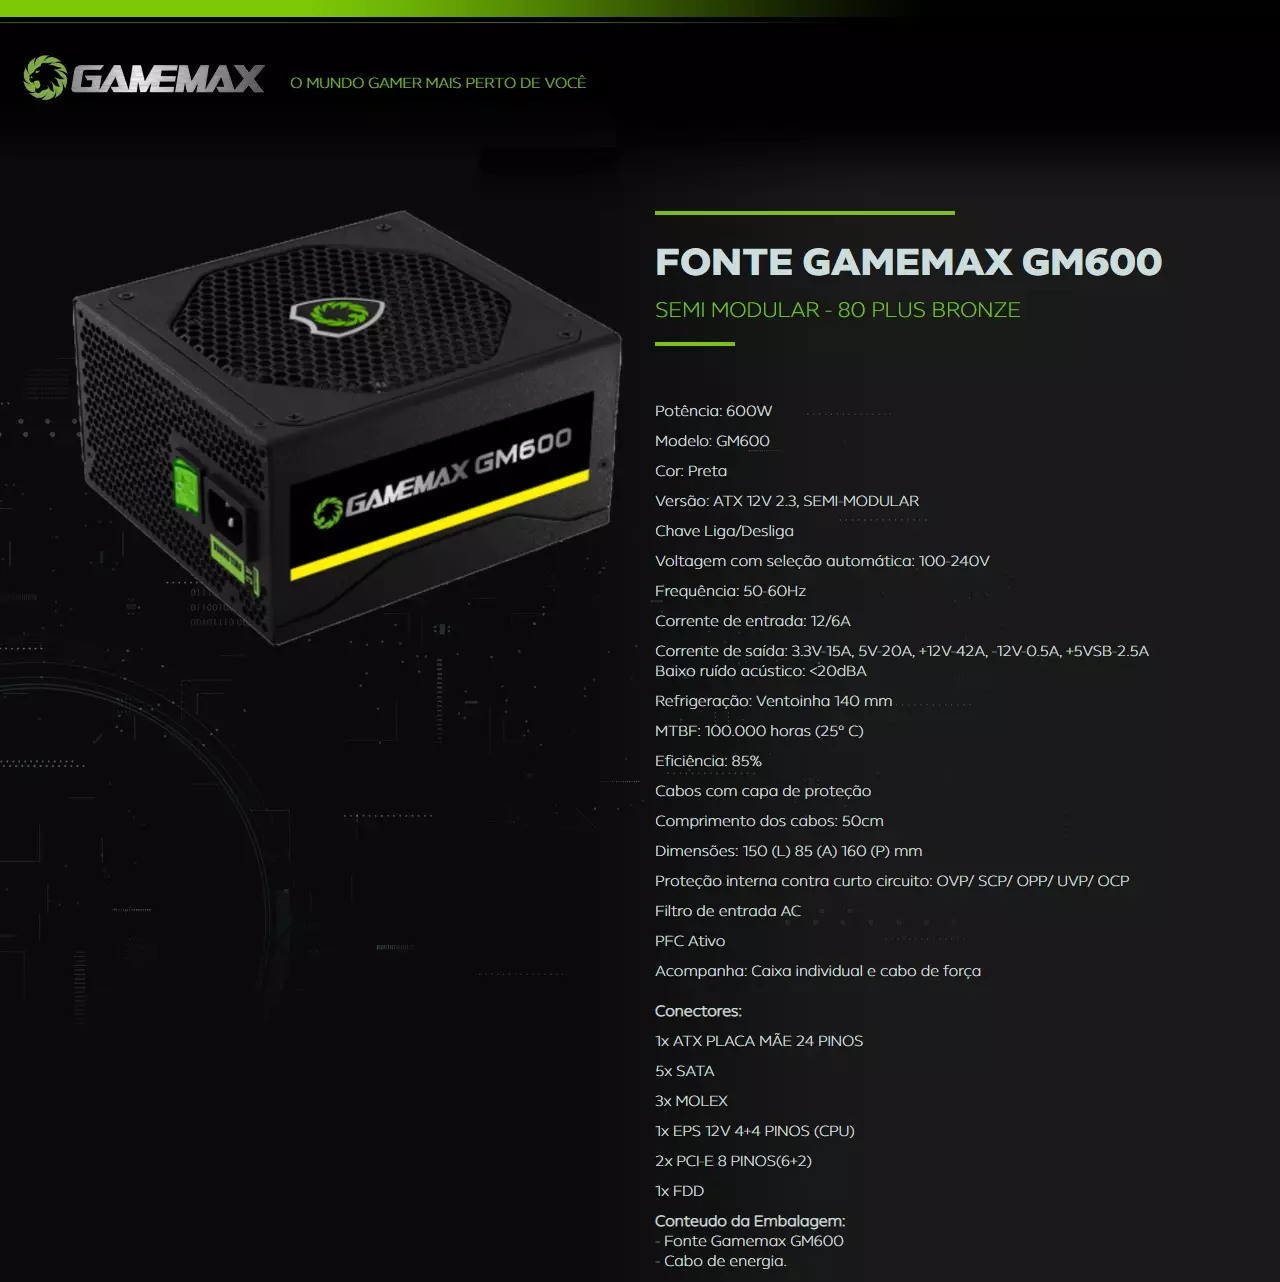 FONTE GAMEMAX GM600 SEMI MODULAR - UNBOXING 